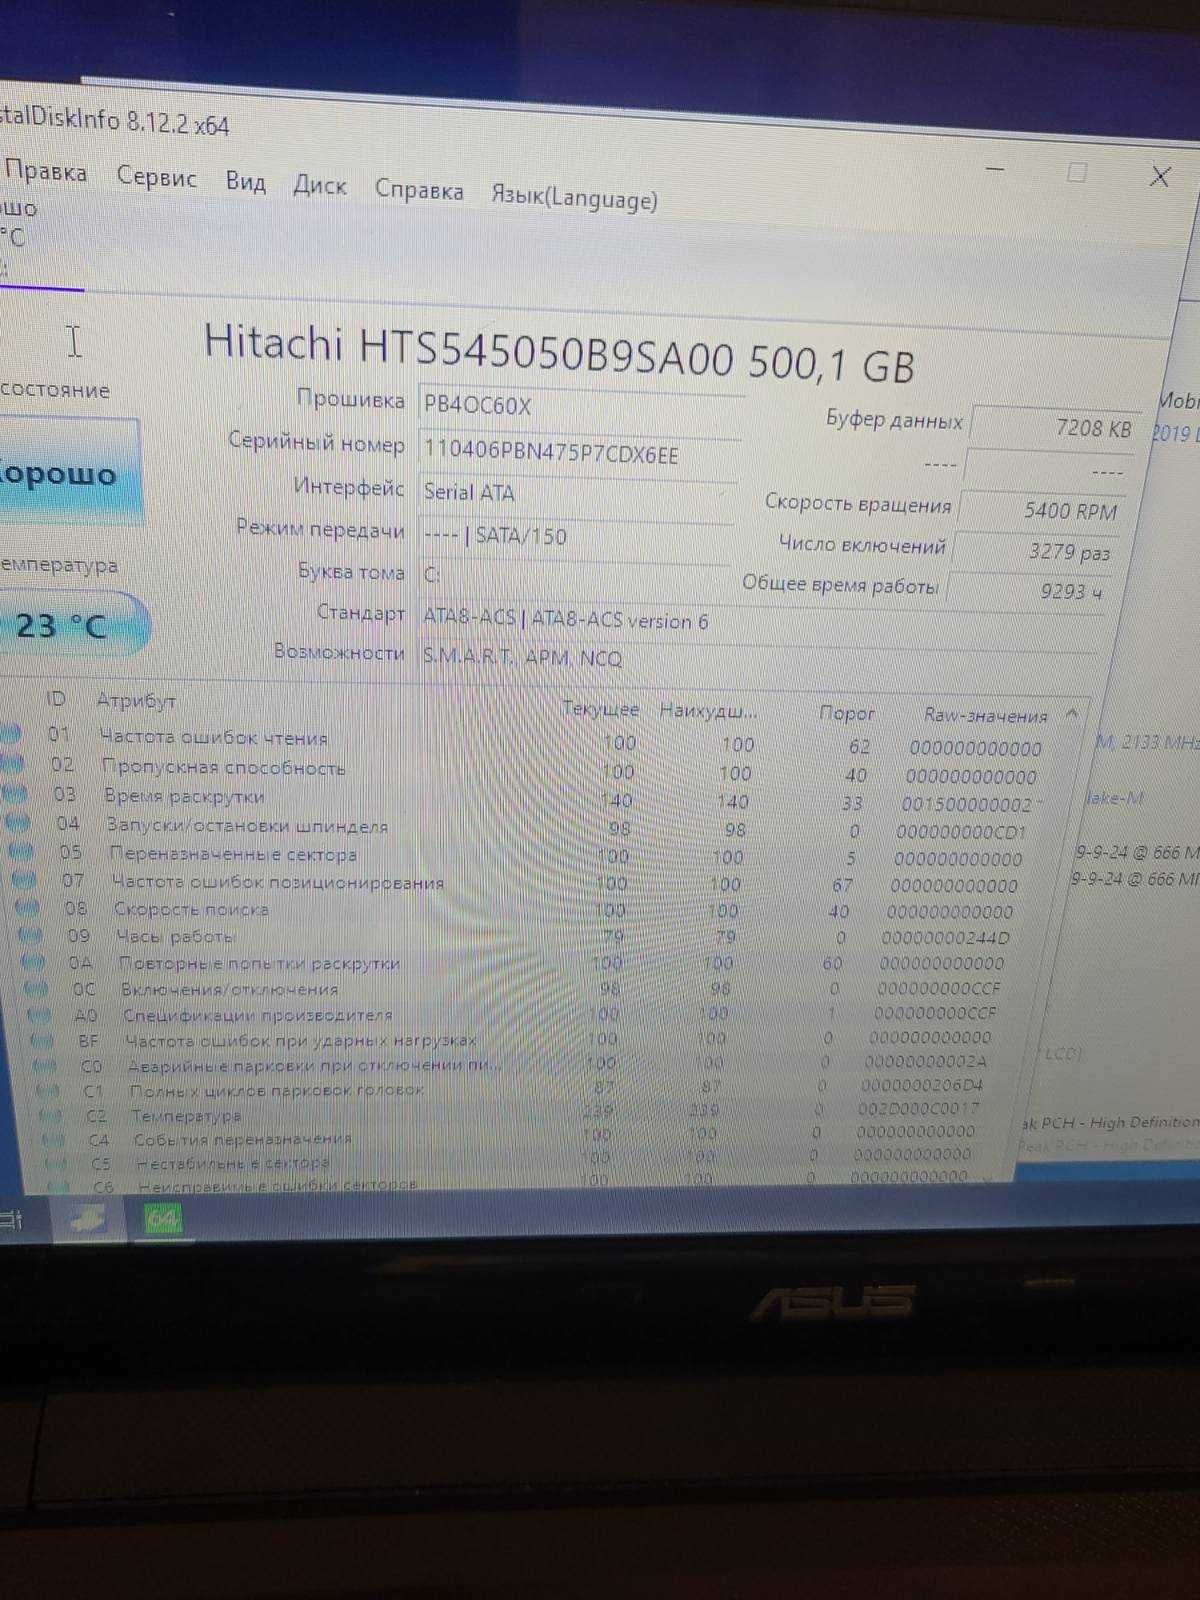 Бюджетный Ноутбук 15.6" Asus X52F Intel i3 330M 4GB-1333 HDD500GB